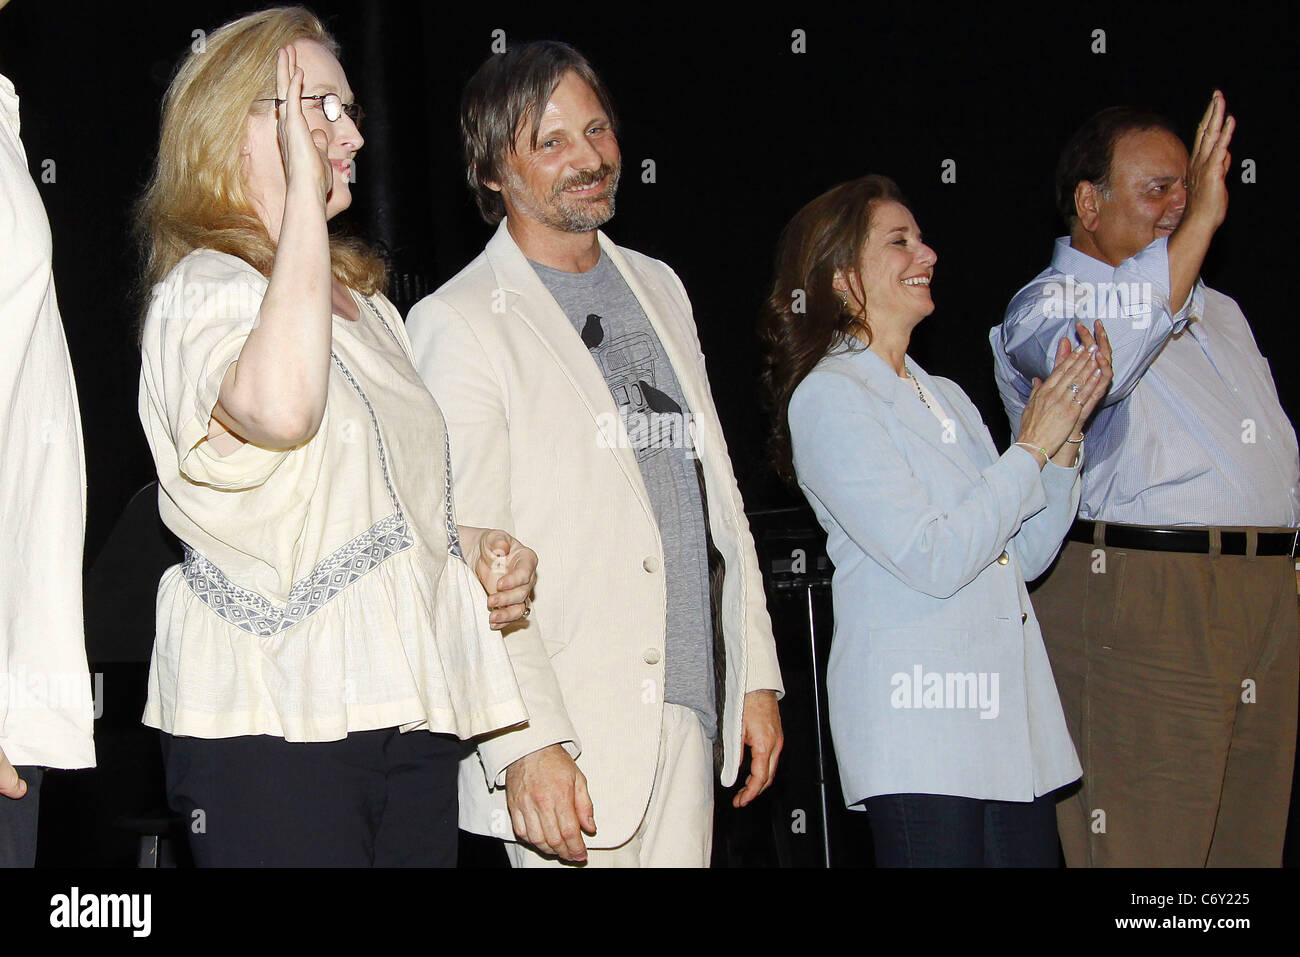 Meryl Streep, Viggo Mortensen, Debra Winger and Paul Sorvino at the photo call for "Speak Truth To Power: Voices Beyond The Stock Photo